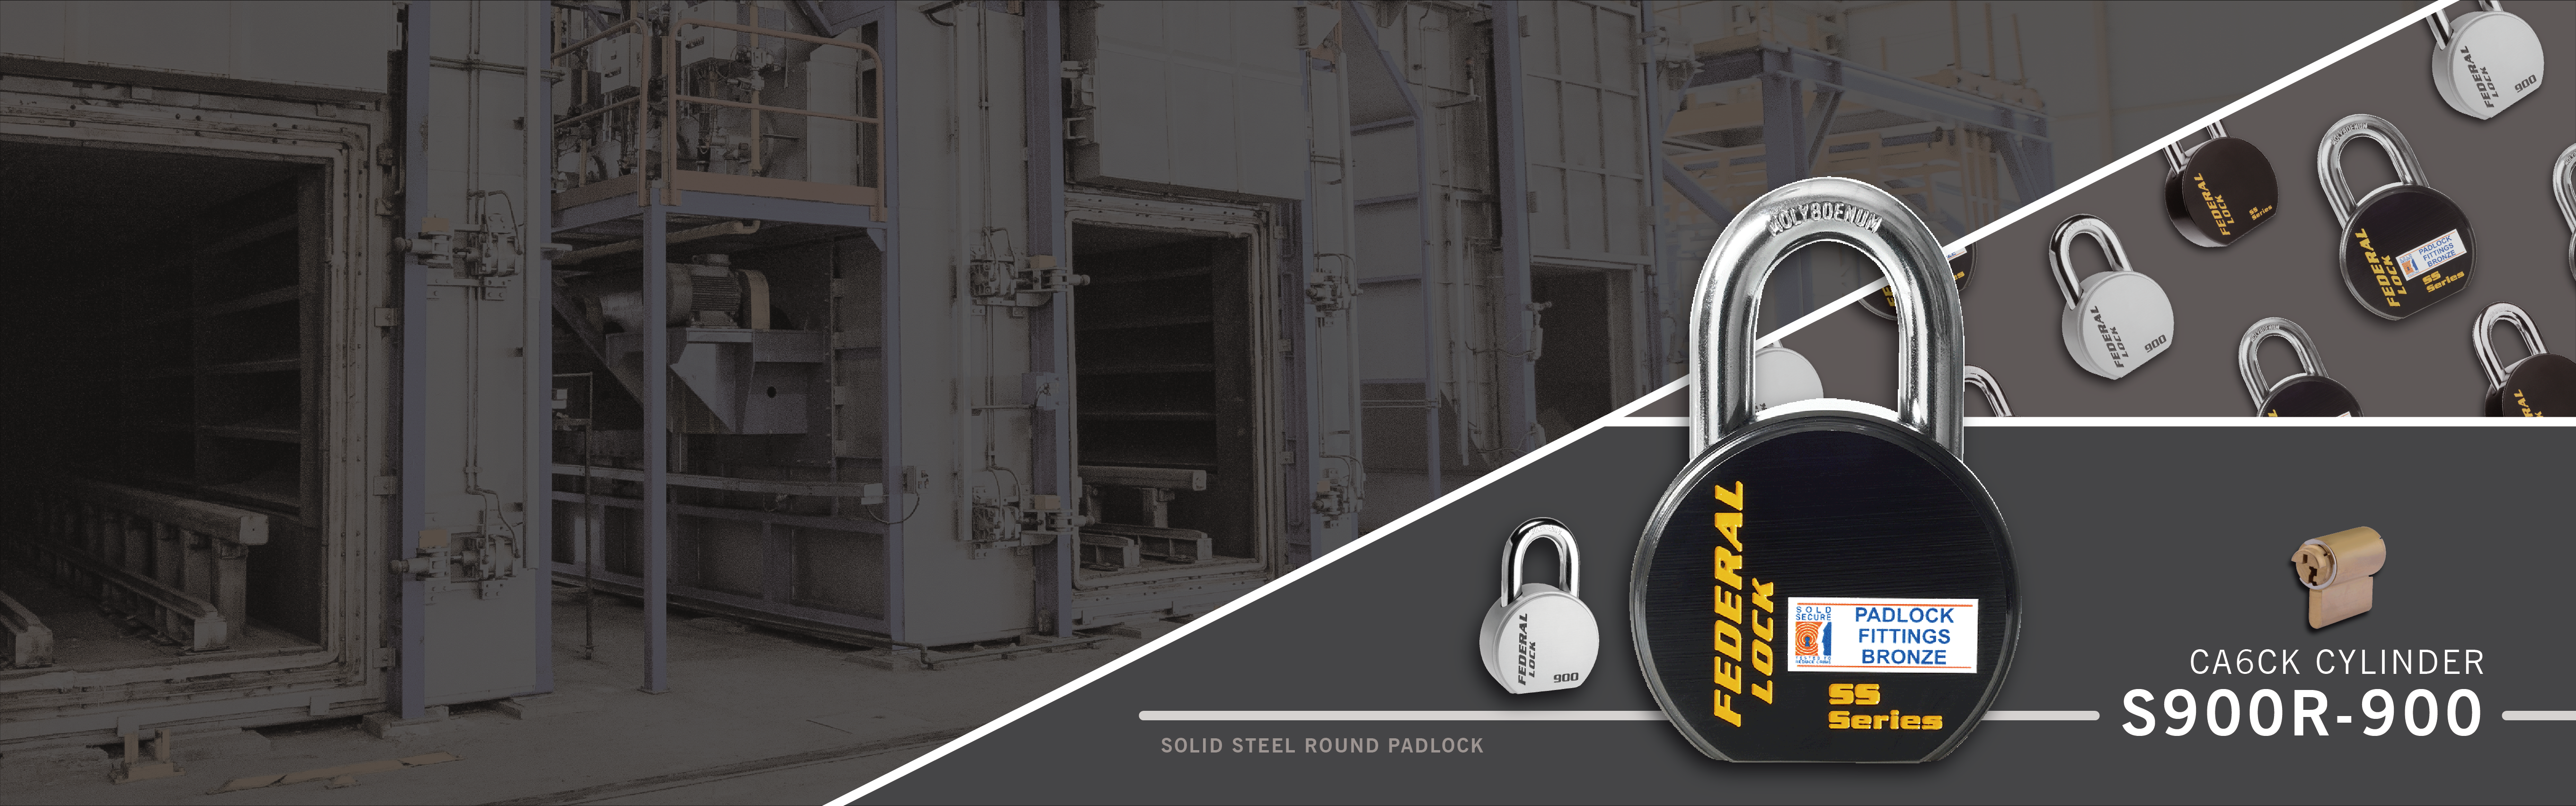 E-coated Hardened Steel Body & Molybdenum Shackle Series